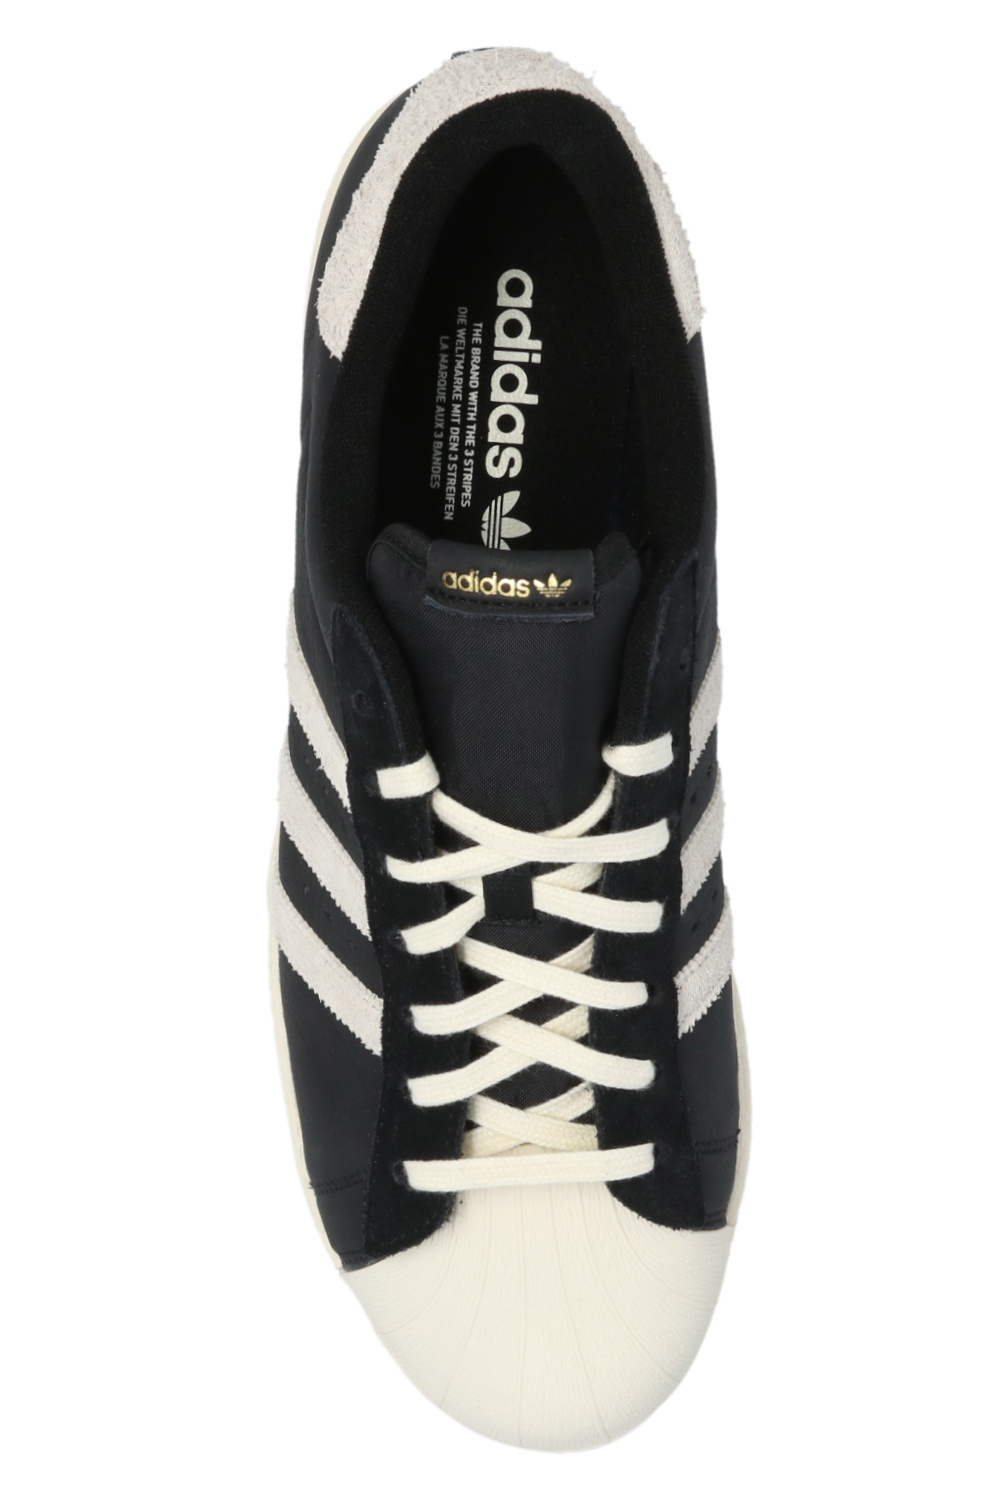 Adidas Superstar 82 Core Black Aluminium Cream White GY3428 Sneaker ...